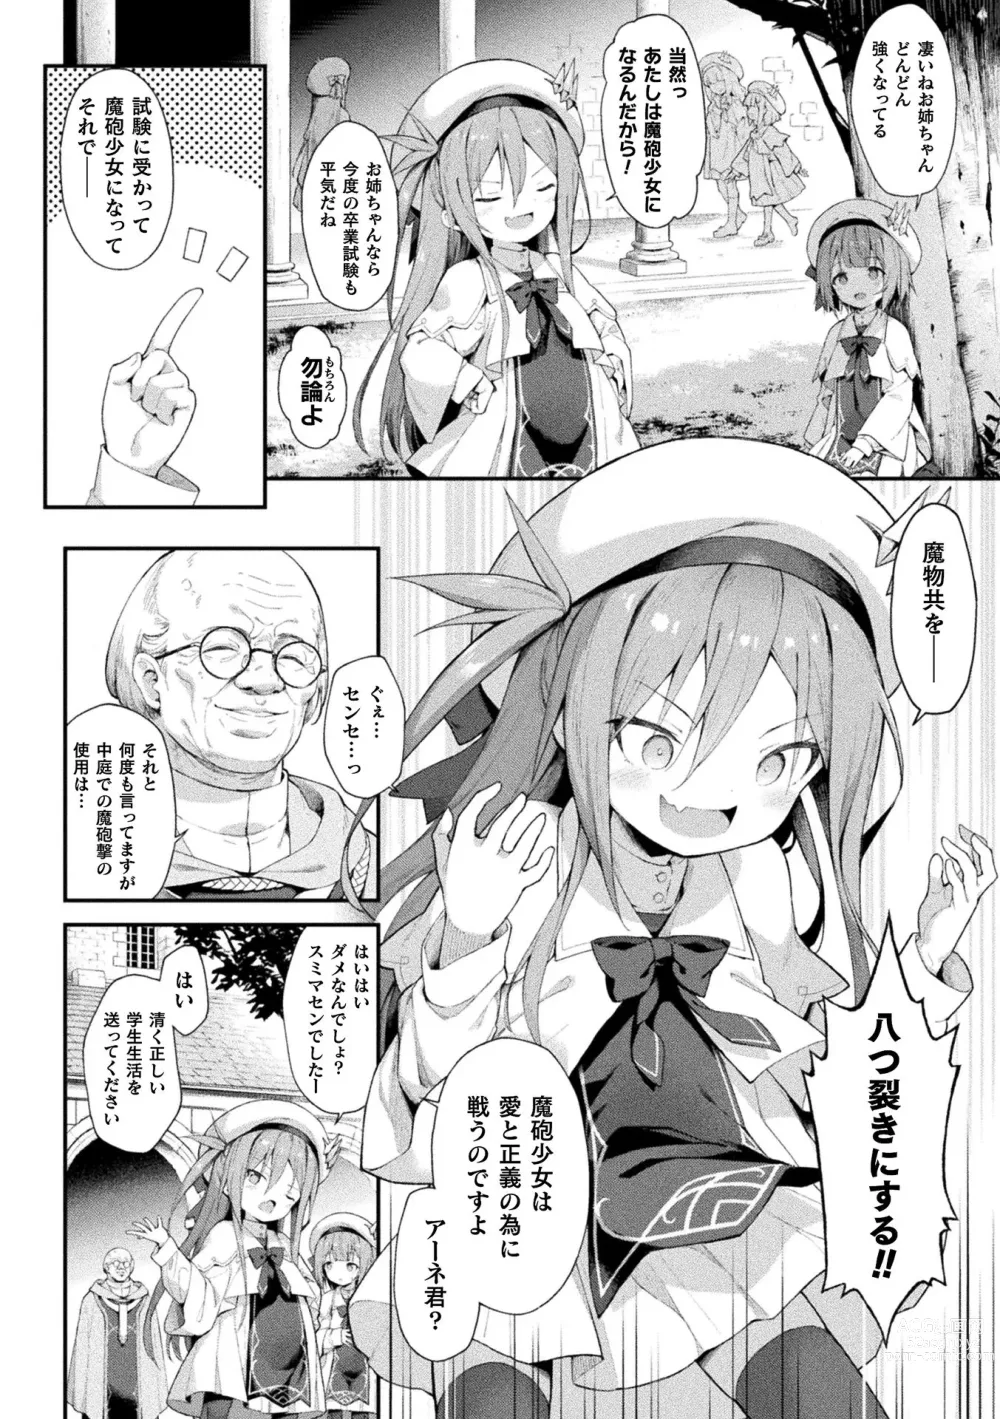 Page 4 of manga Kukkoro Heroines Vol. 32